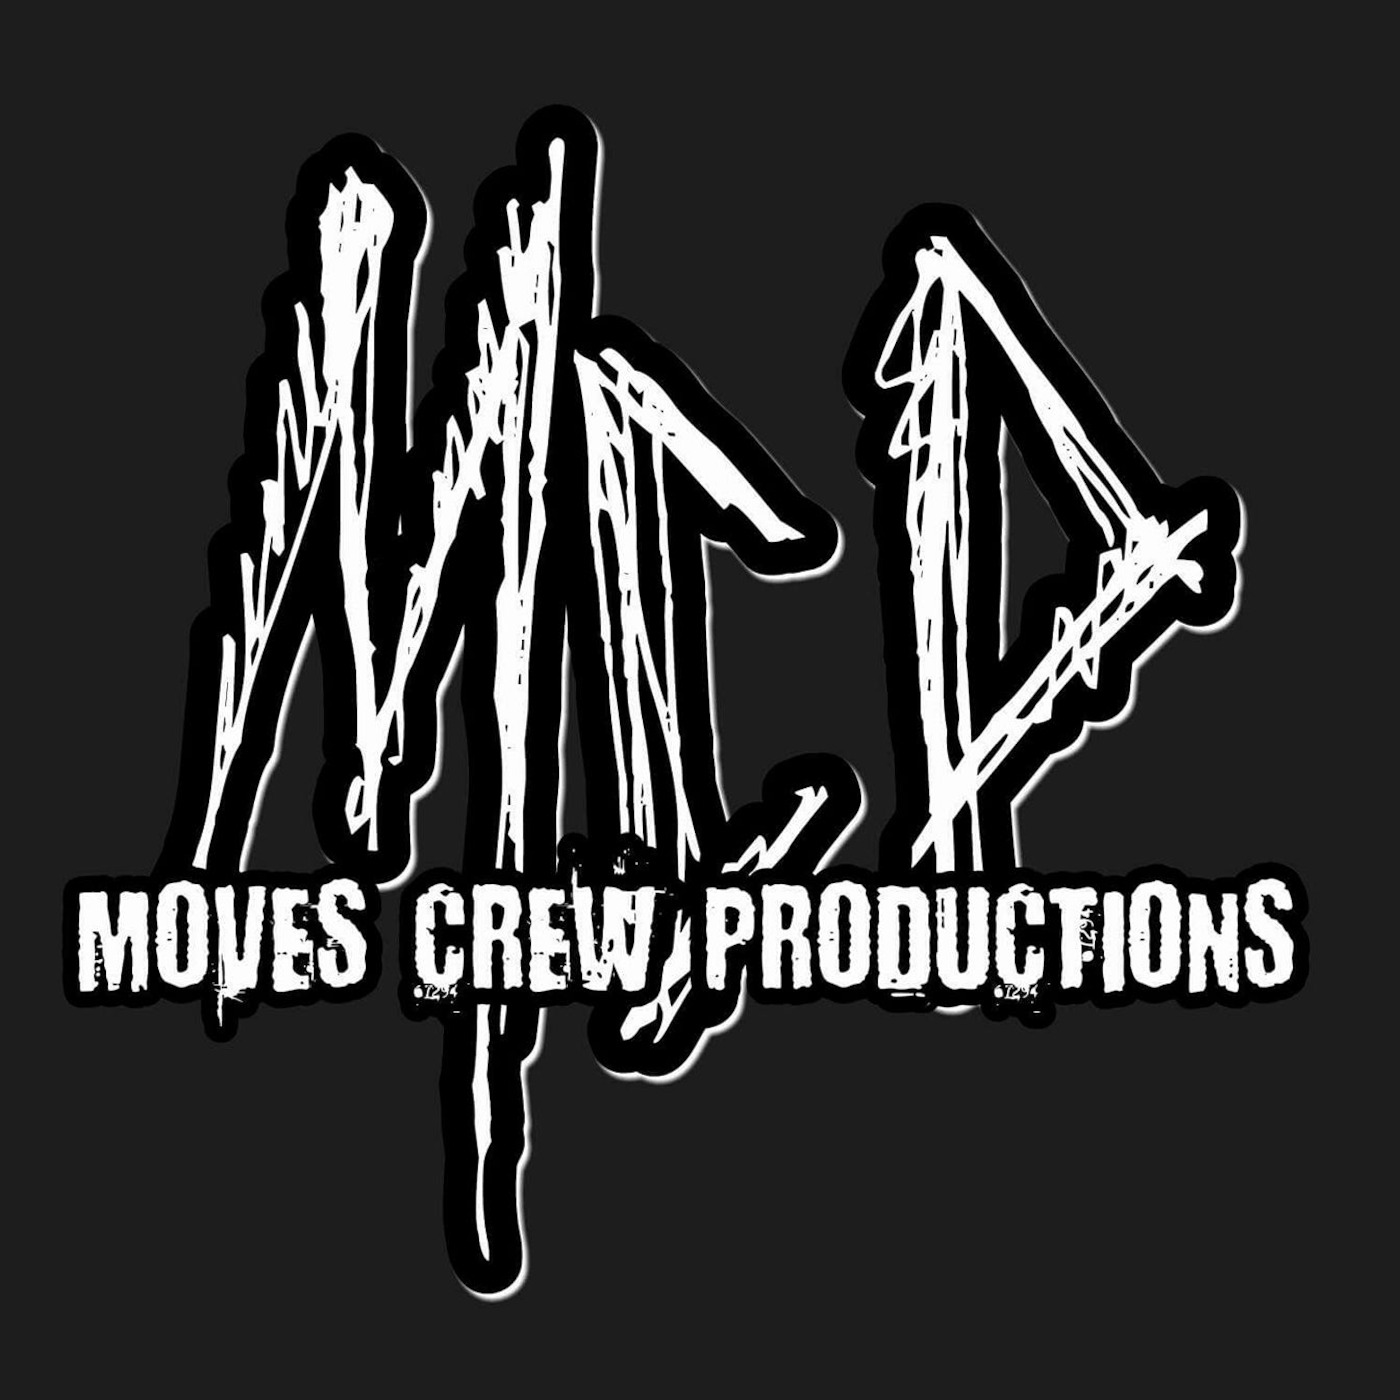 Moves Crew Podcast